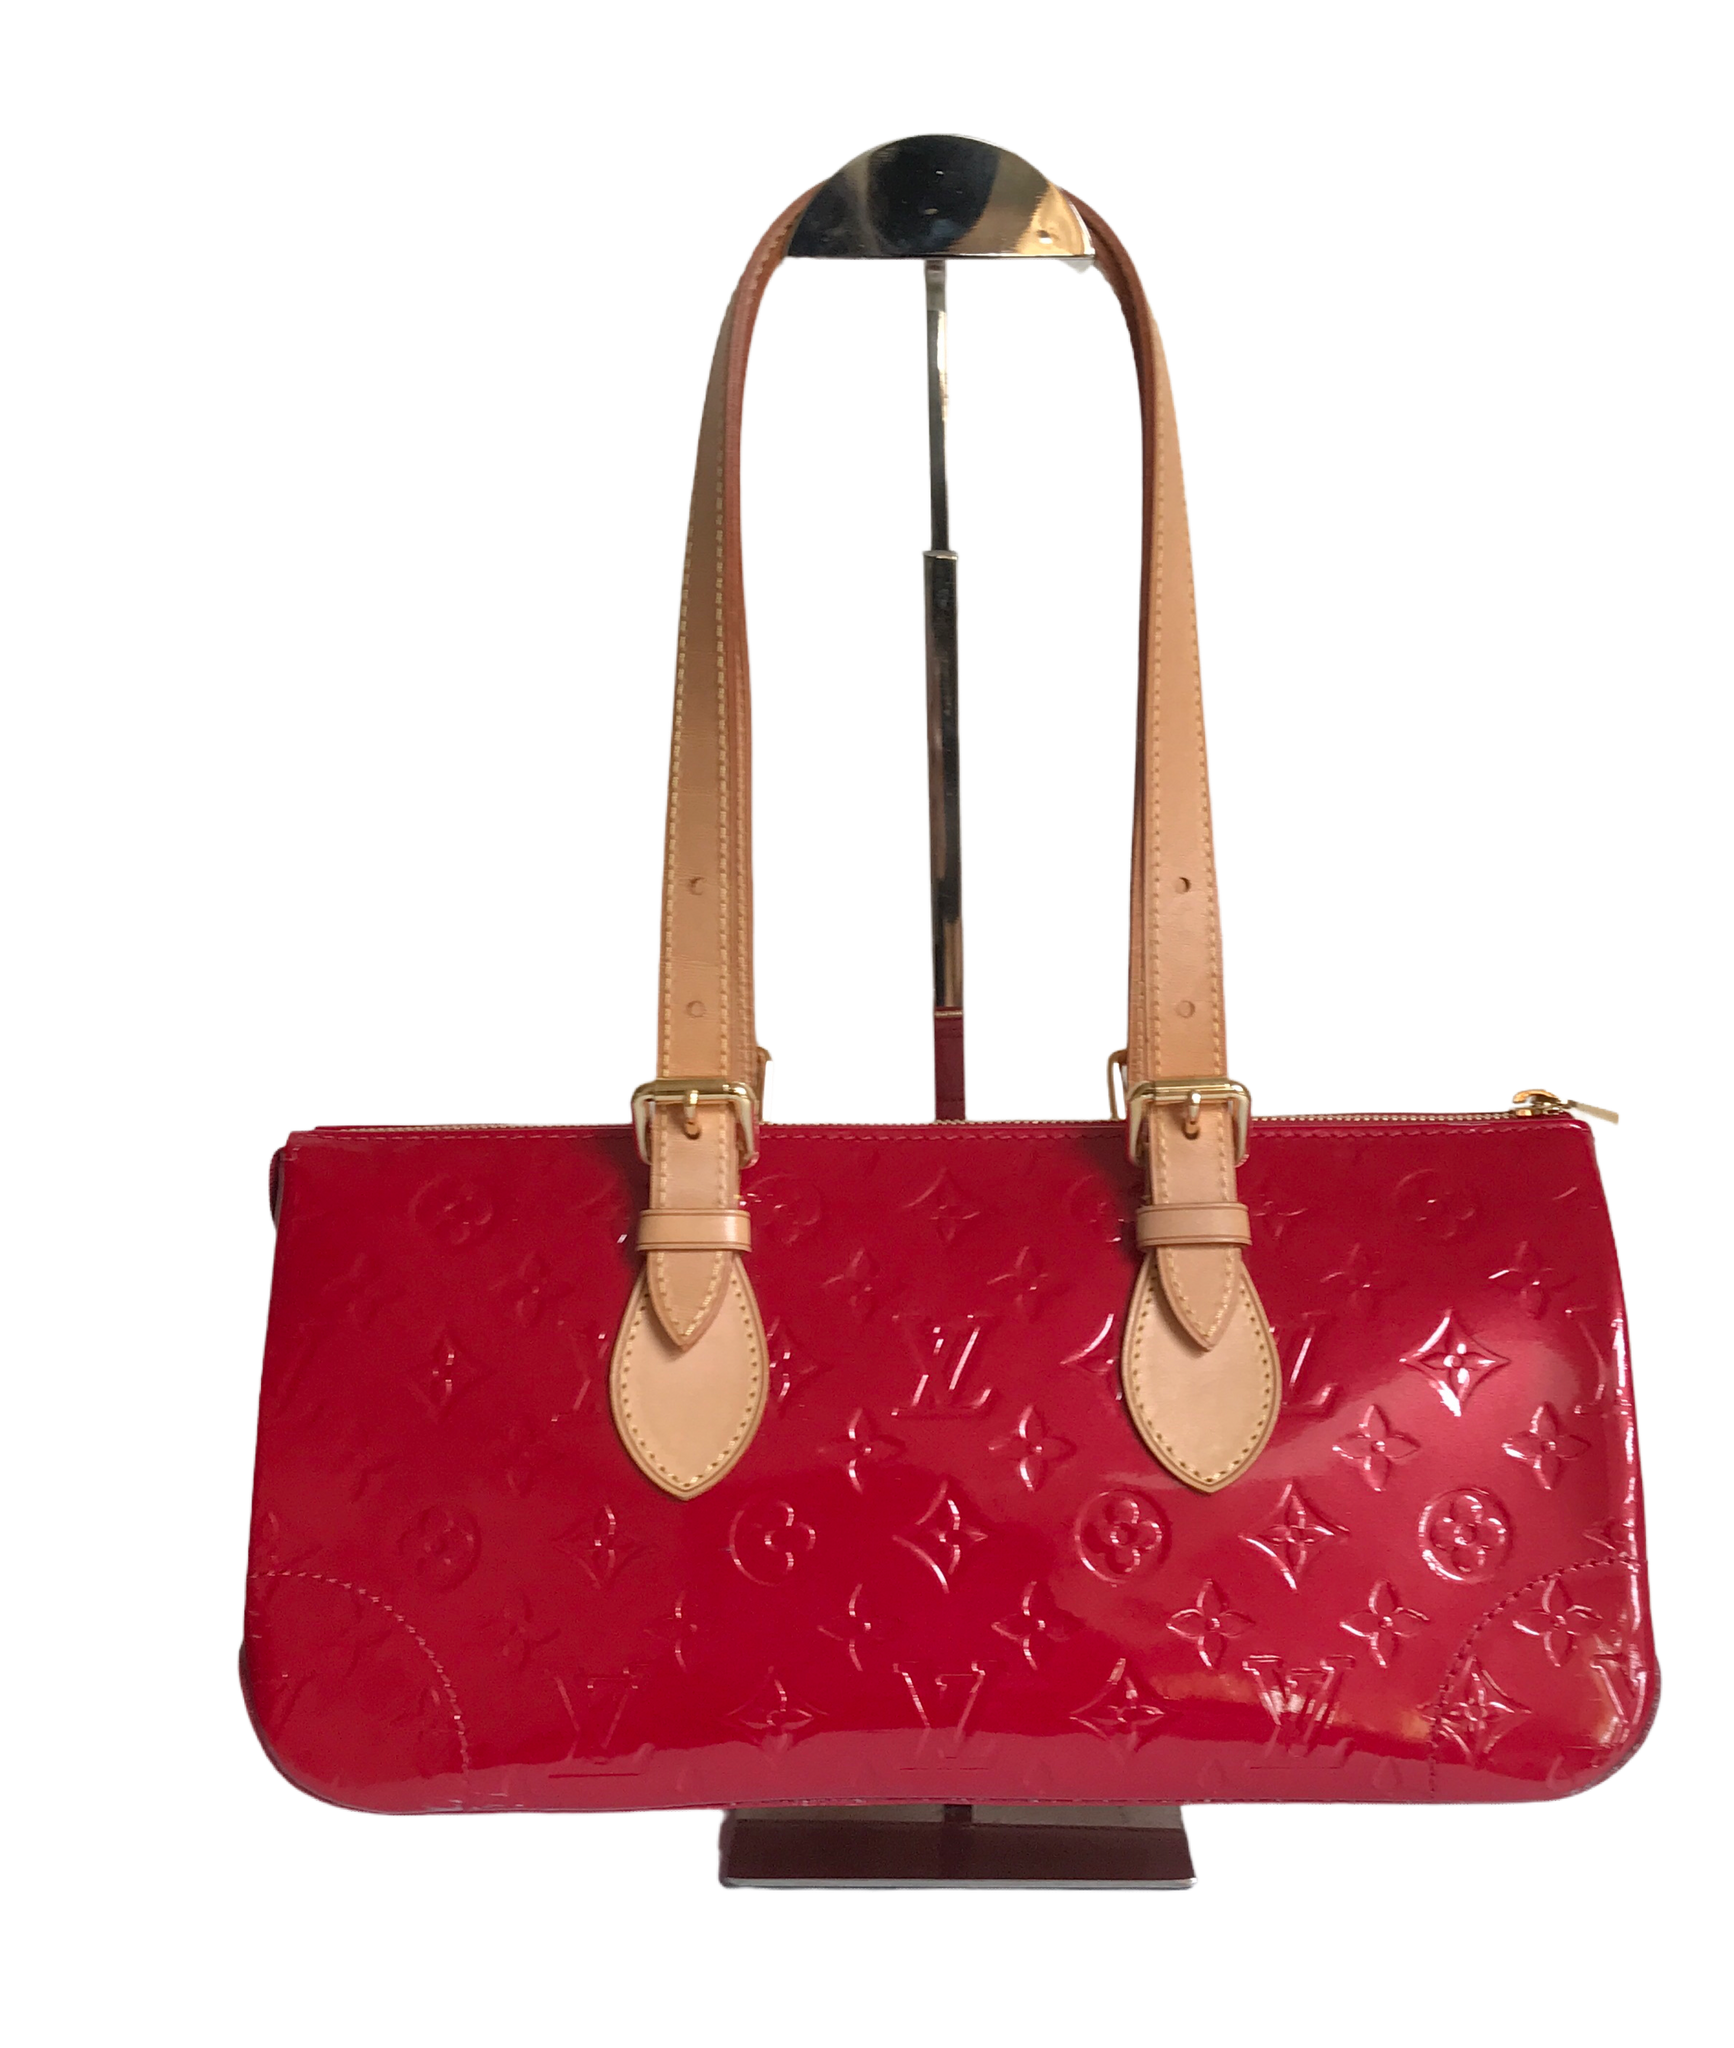 Authentic Louis Vuitton Small Vernis Handbag